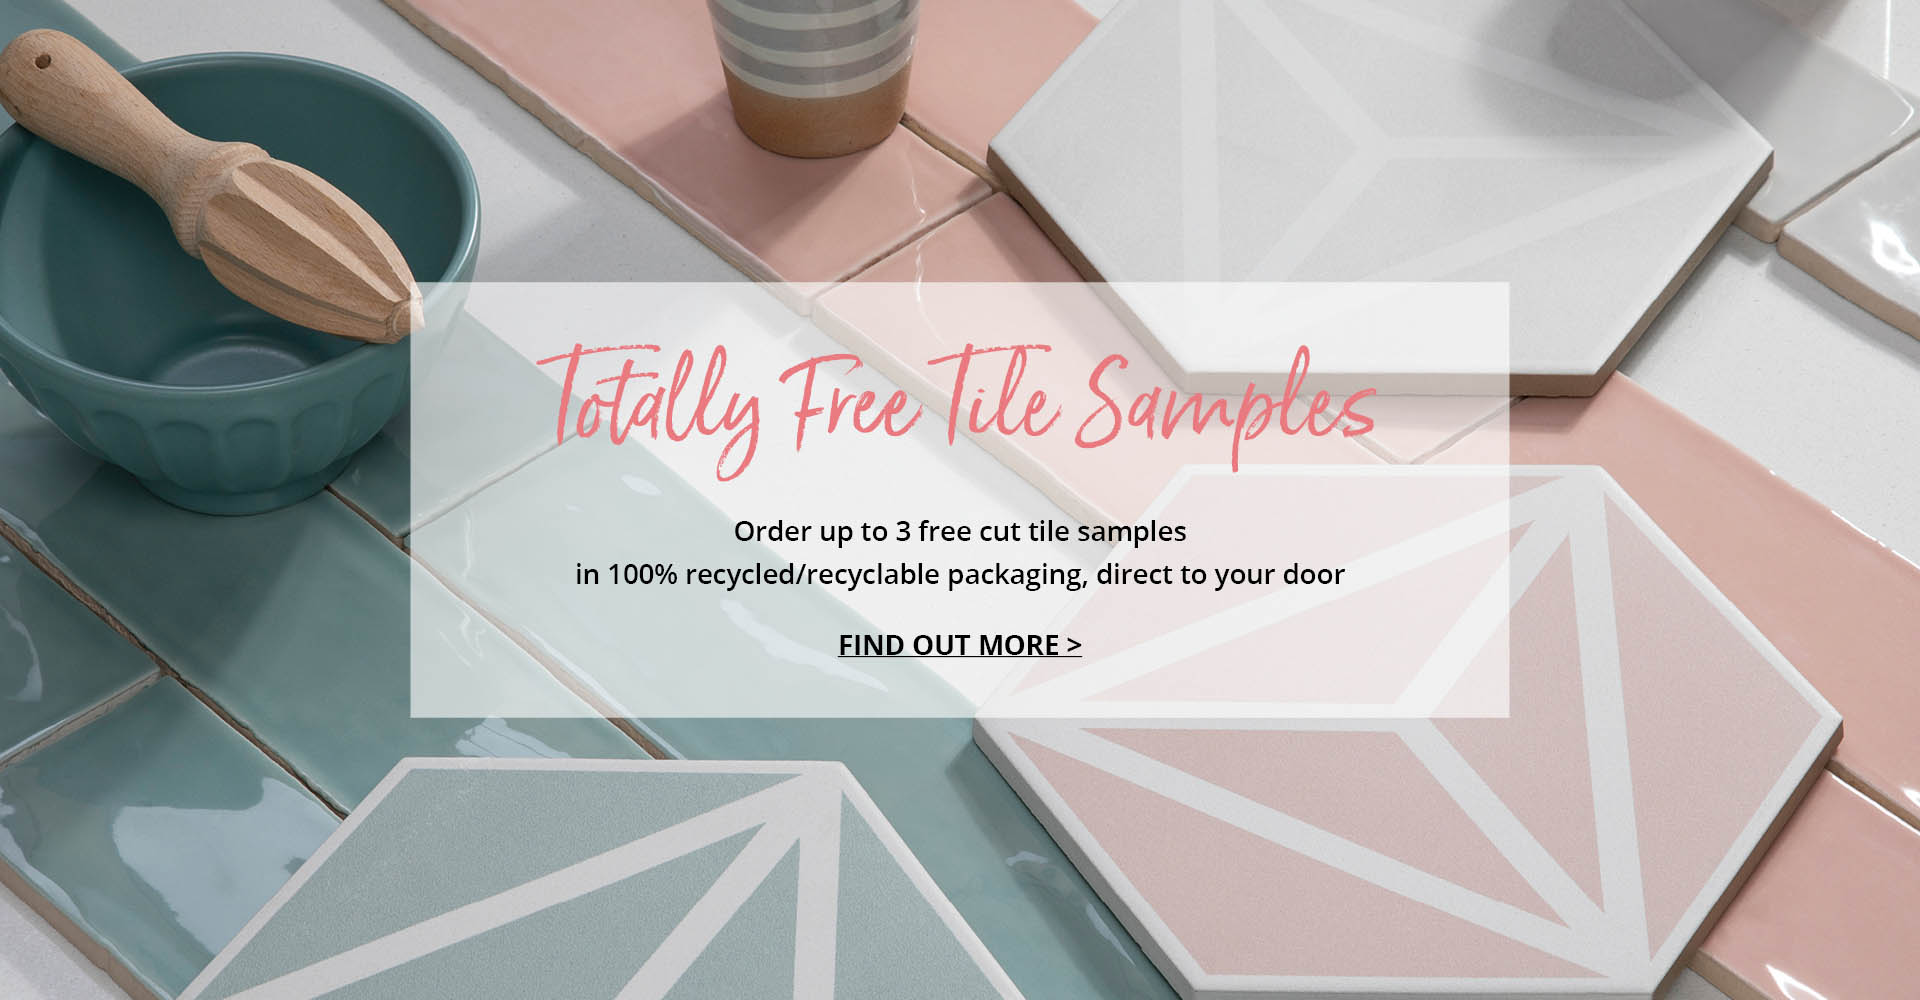 Totally free tile samples